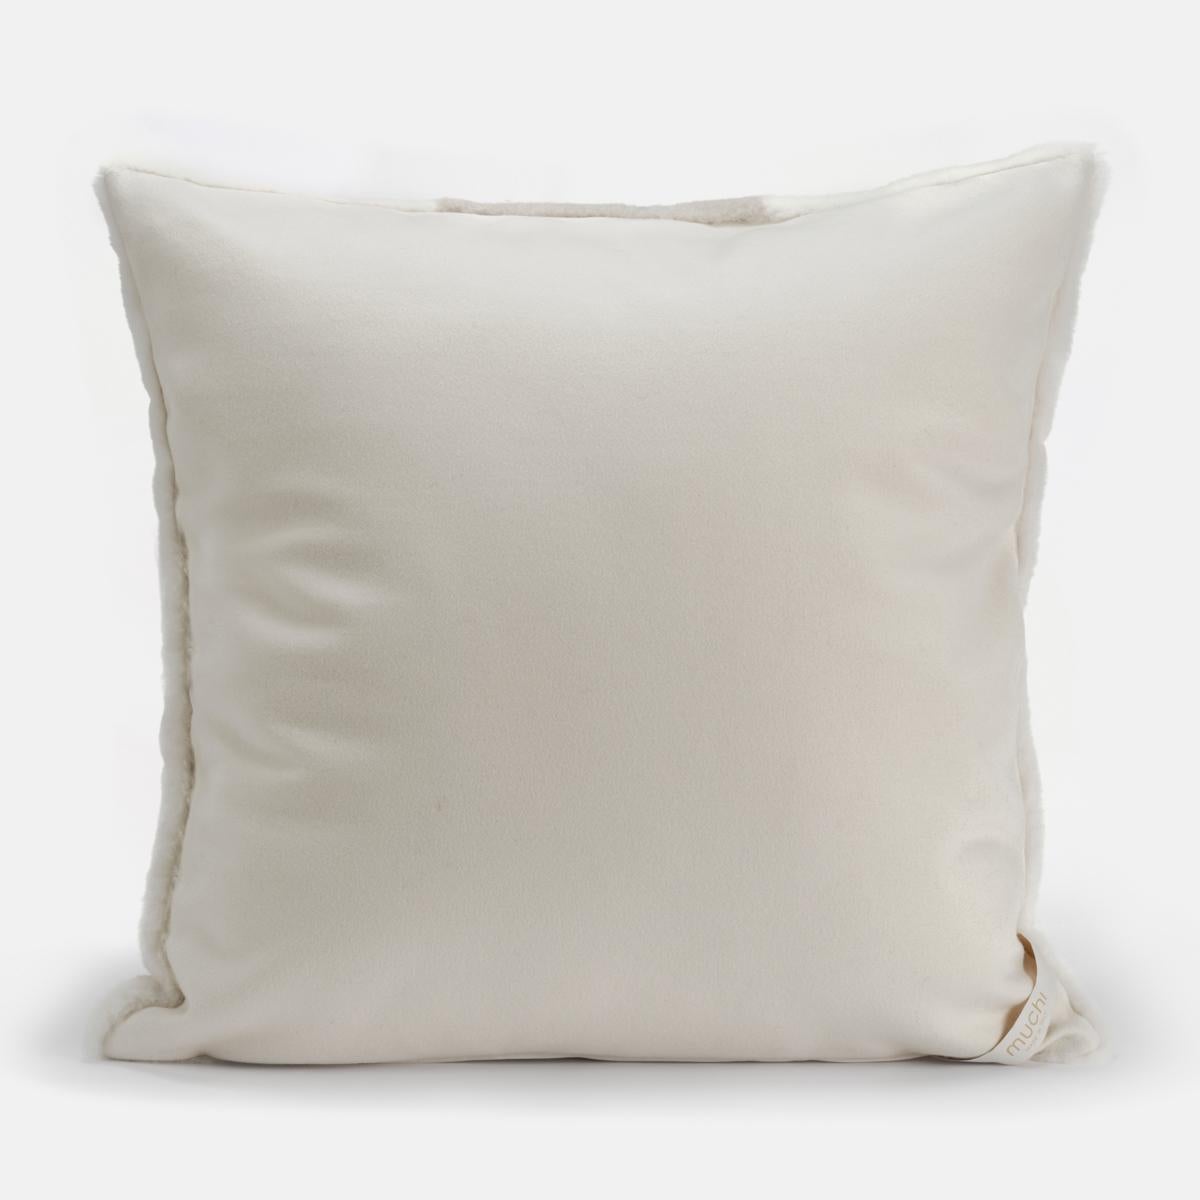 Italian Yang South America Beaver Castorino White Wool Fur Pillow Cushion by Muchi Decor For Sale